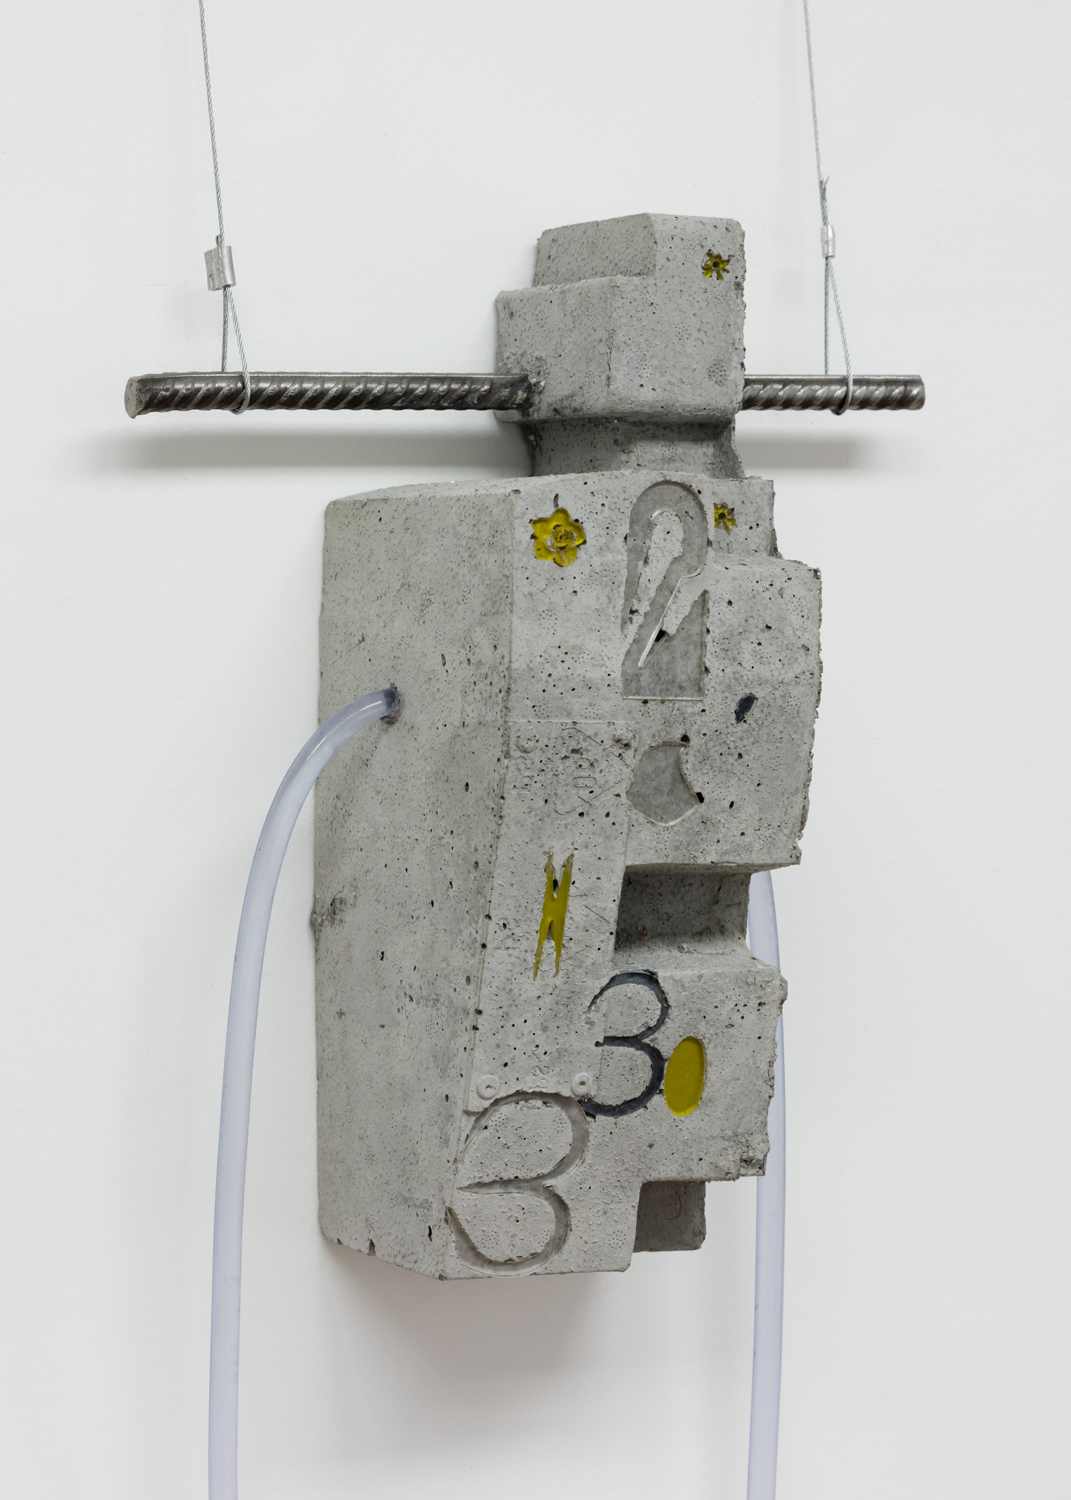  Phoebe Berglund in collaboration with Arkadiy Ryabin,  2033,  2019. Concrete, rebar, plexiglass, vinyl tubing. 13.5 x 12.5 x 5.5 inches. 